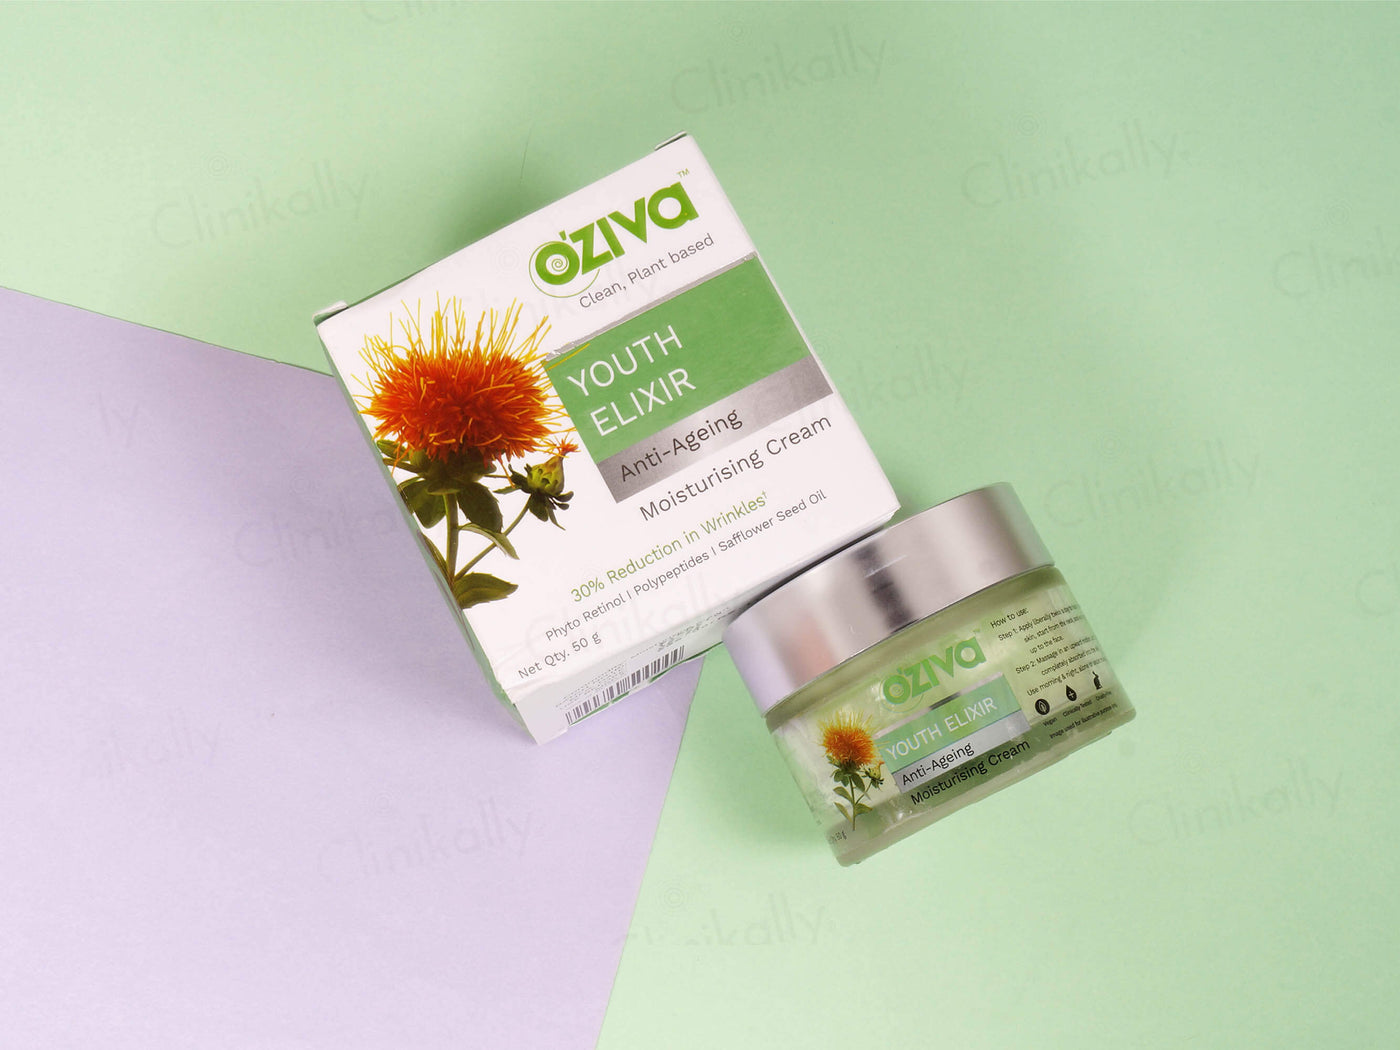 Oziva Youth Elixir Anti-Ageing Cream - Clinikally